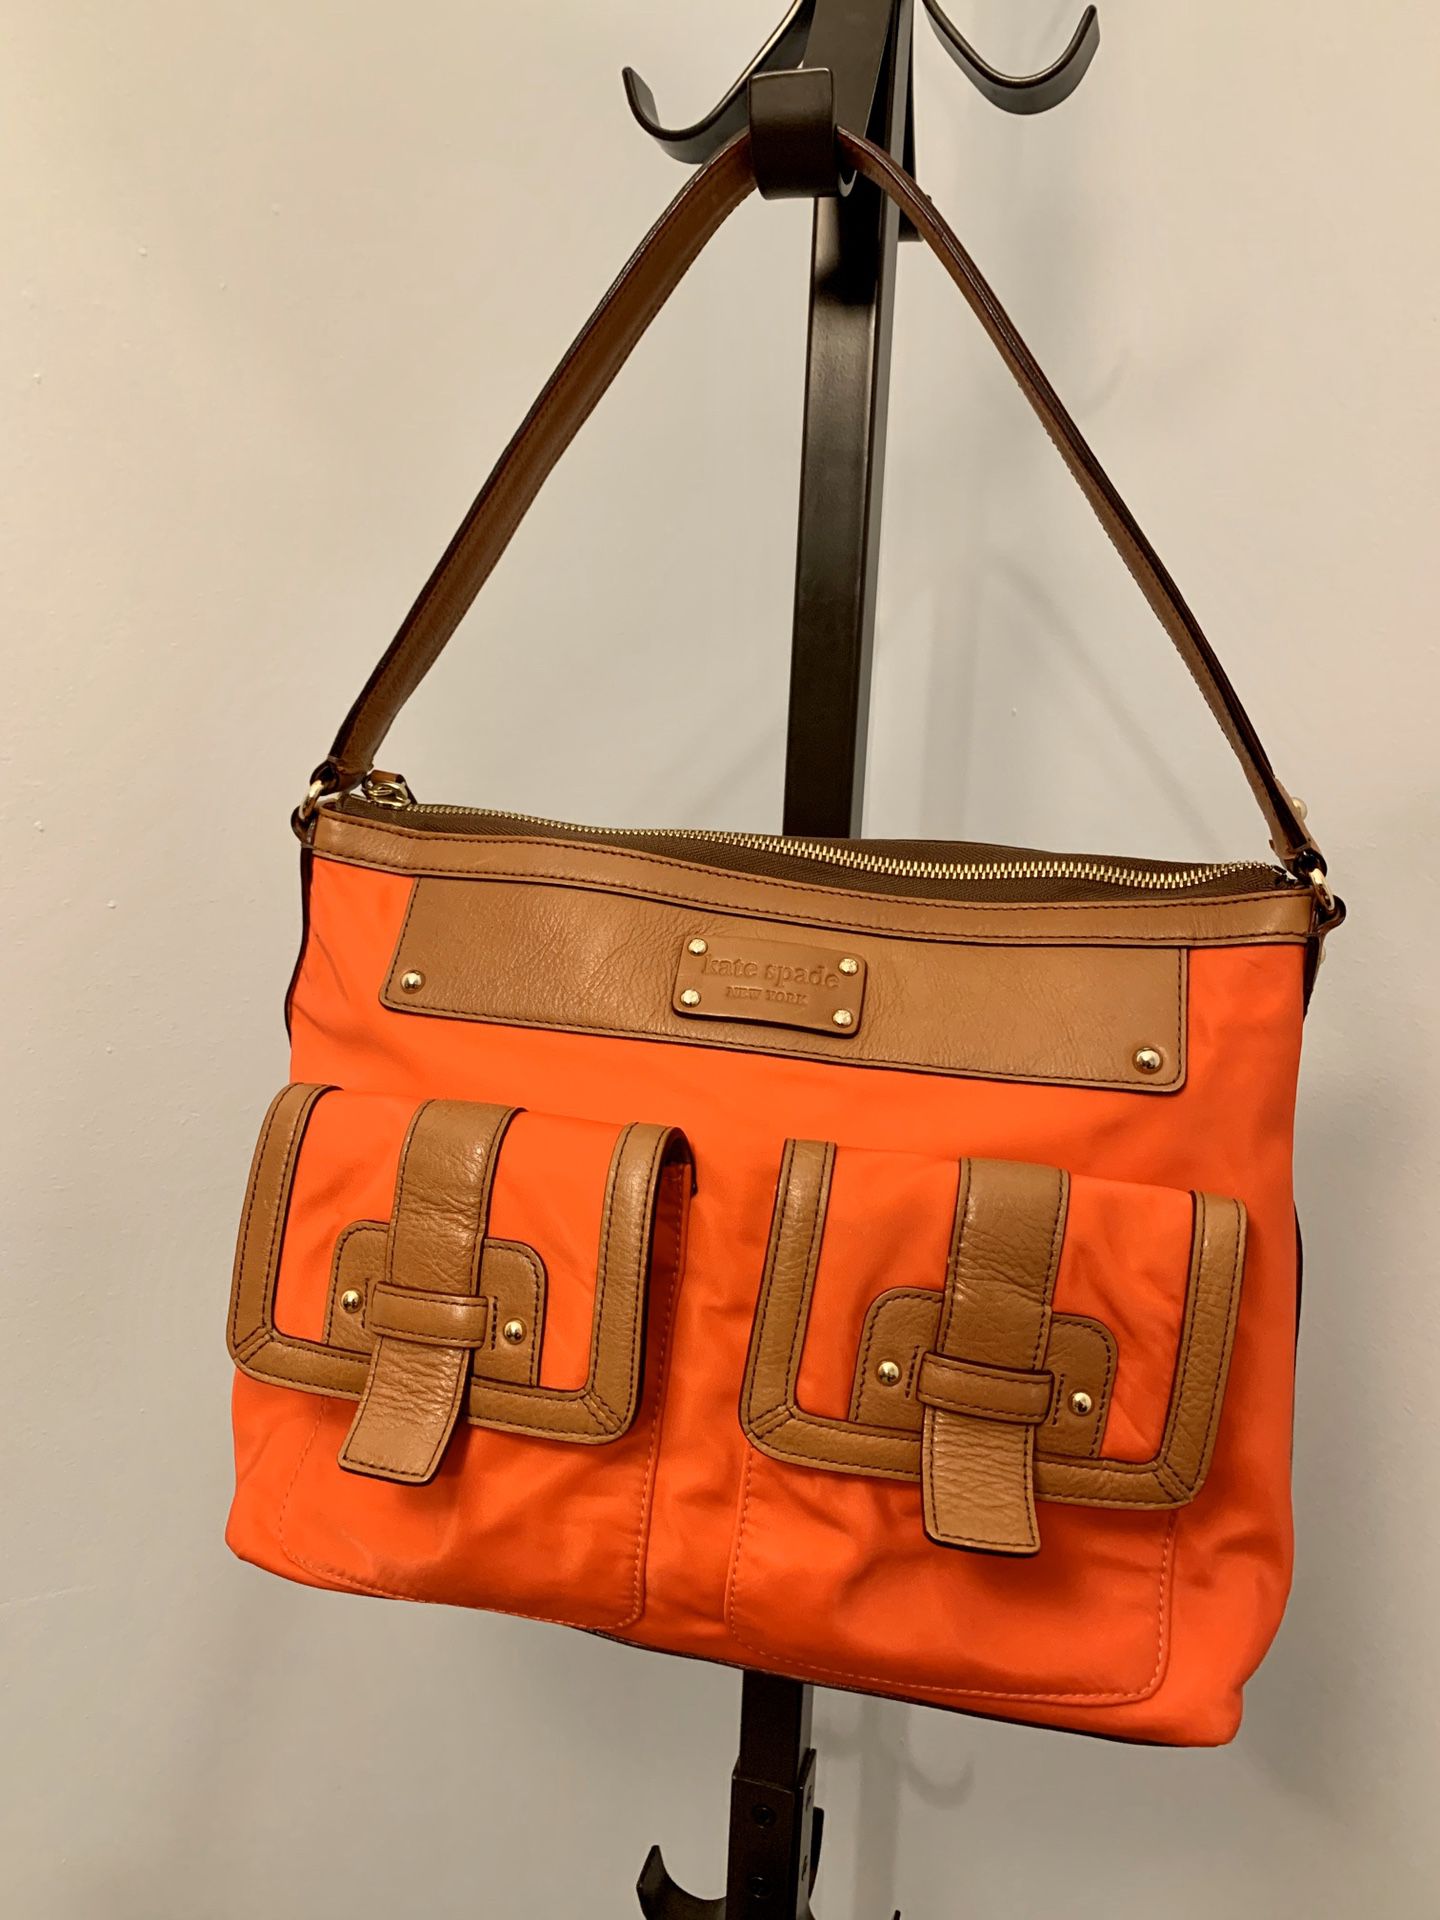 Authentic Kate Spade Manda Hanover Bag